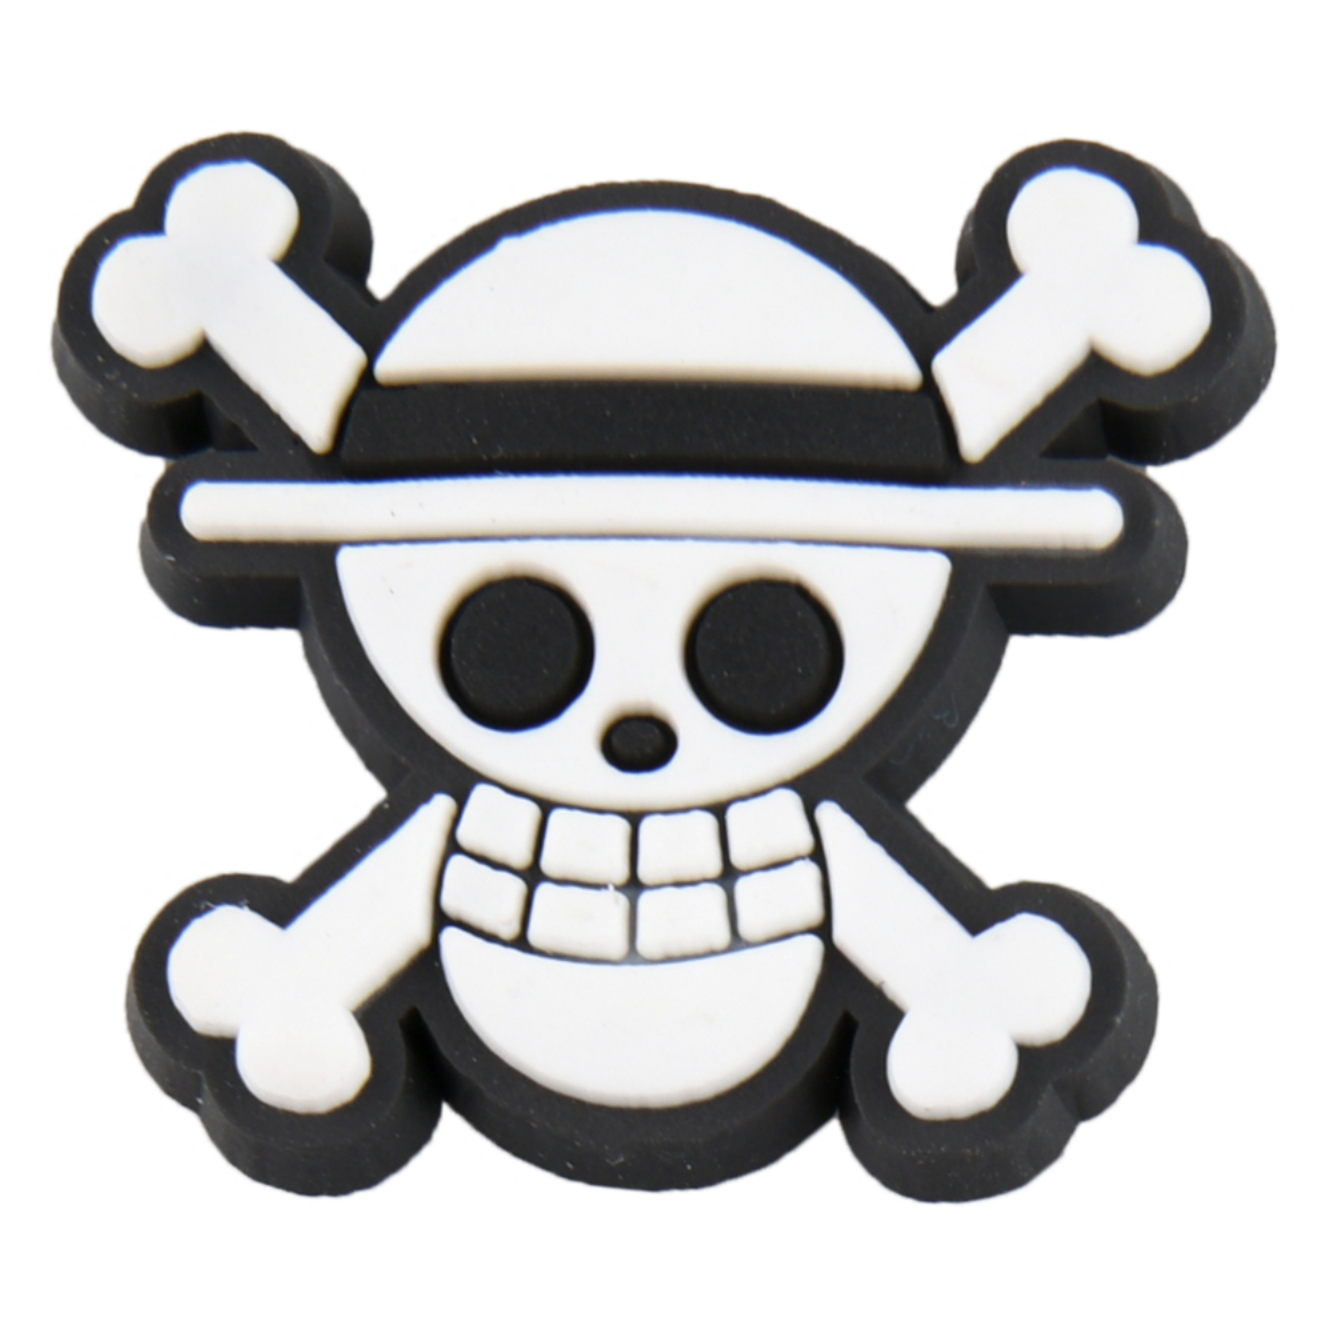 Gift set One Piece - Skull